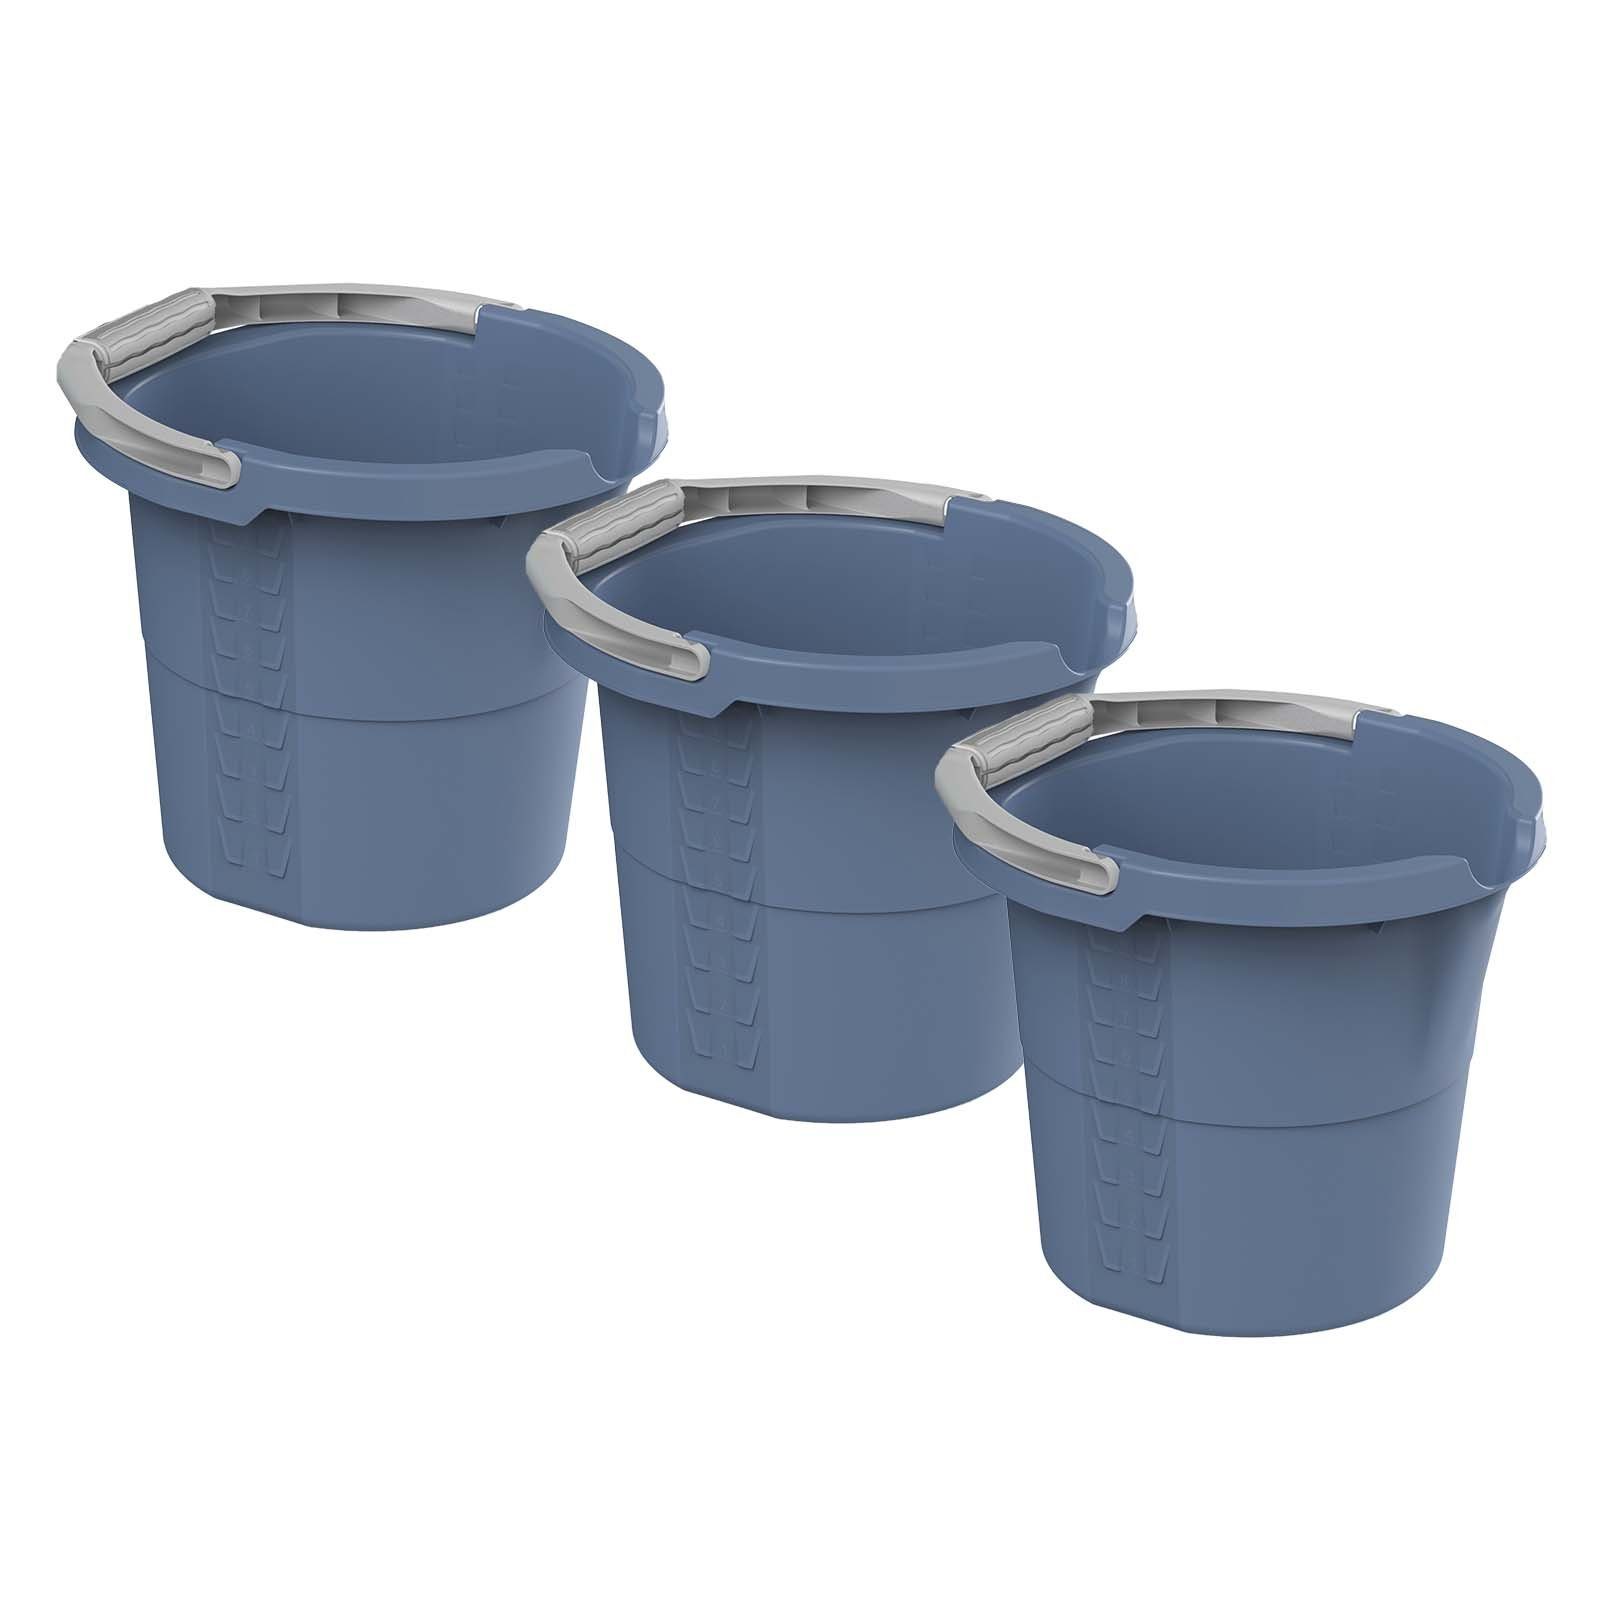 ROTHO Putzeimer Daily 3er Set Skaleneimer 10 l DAILY, Kunststoff (PP recycelt), (Putzeimerset, 3er-Set), mit Skalenangabe in Litern Horizon blau